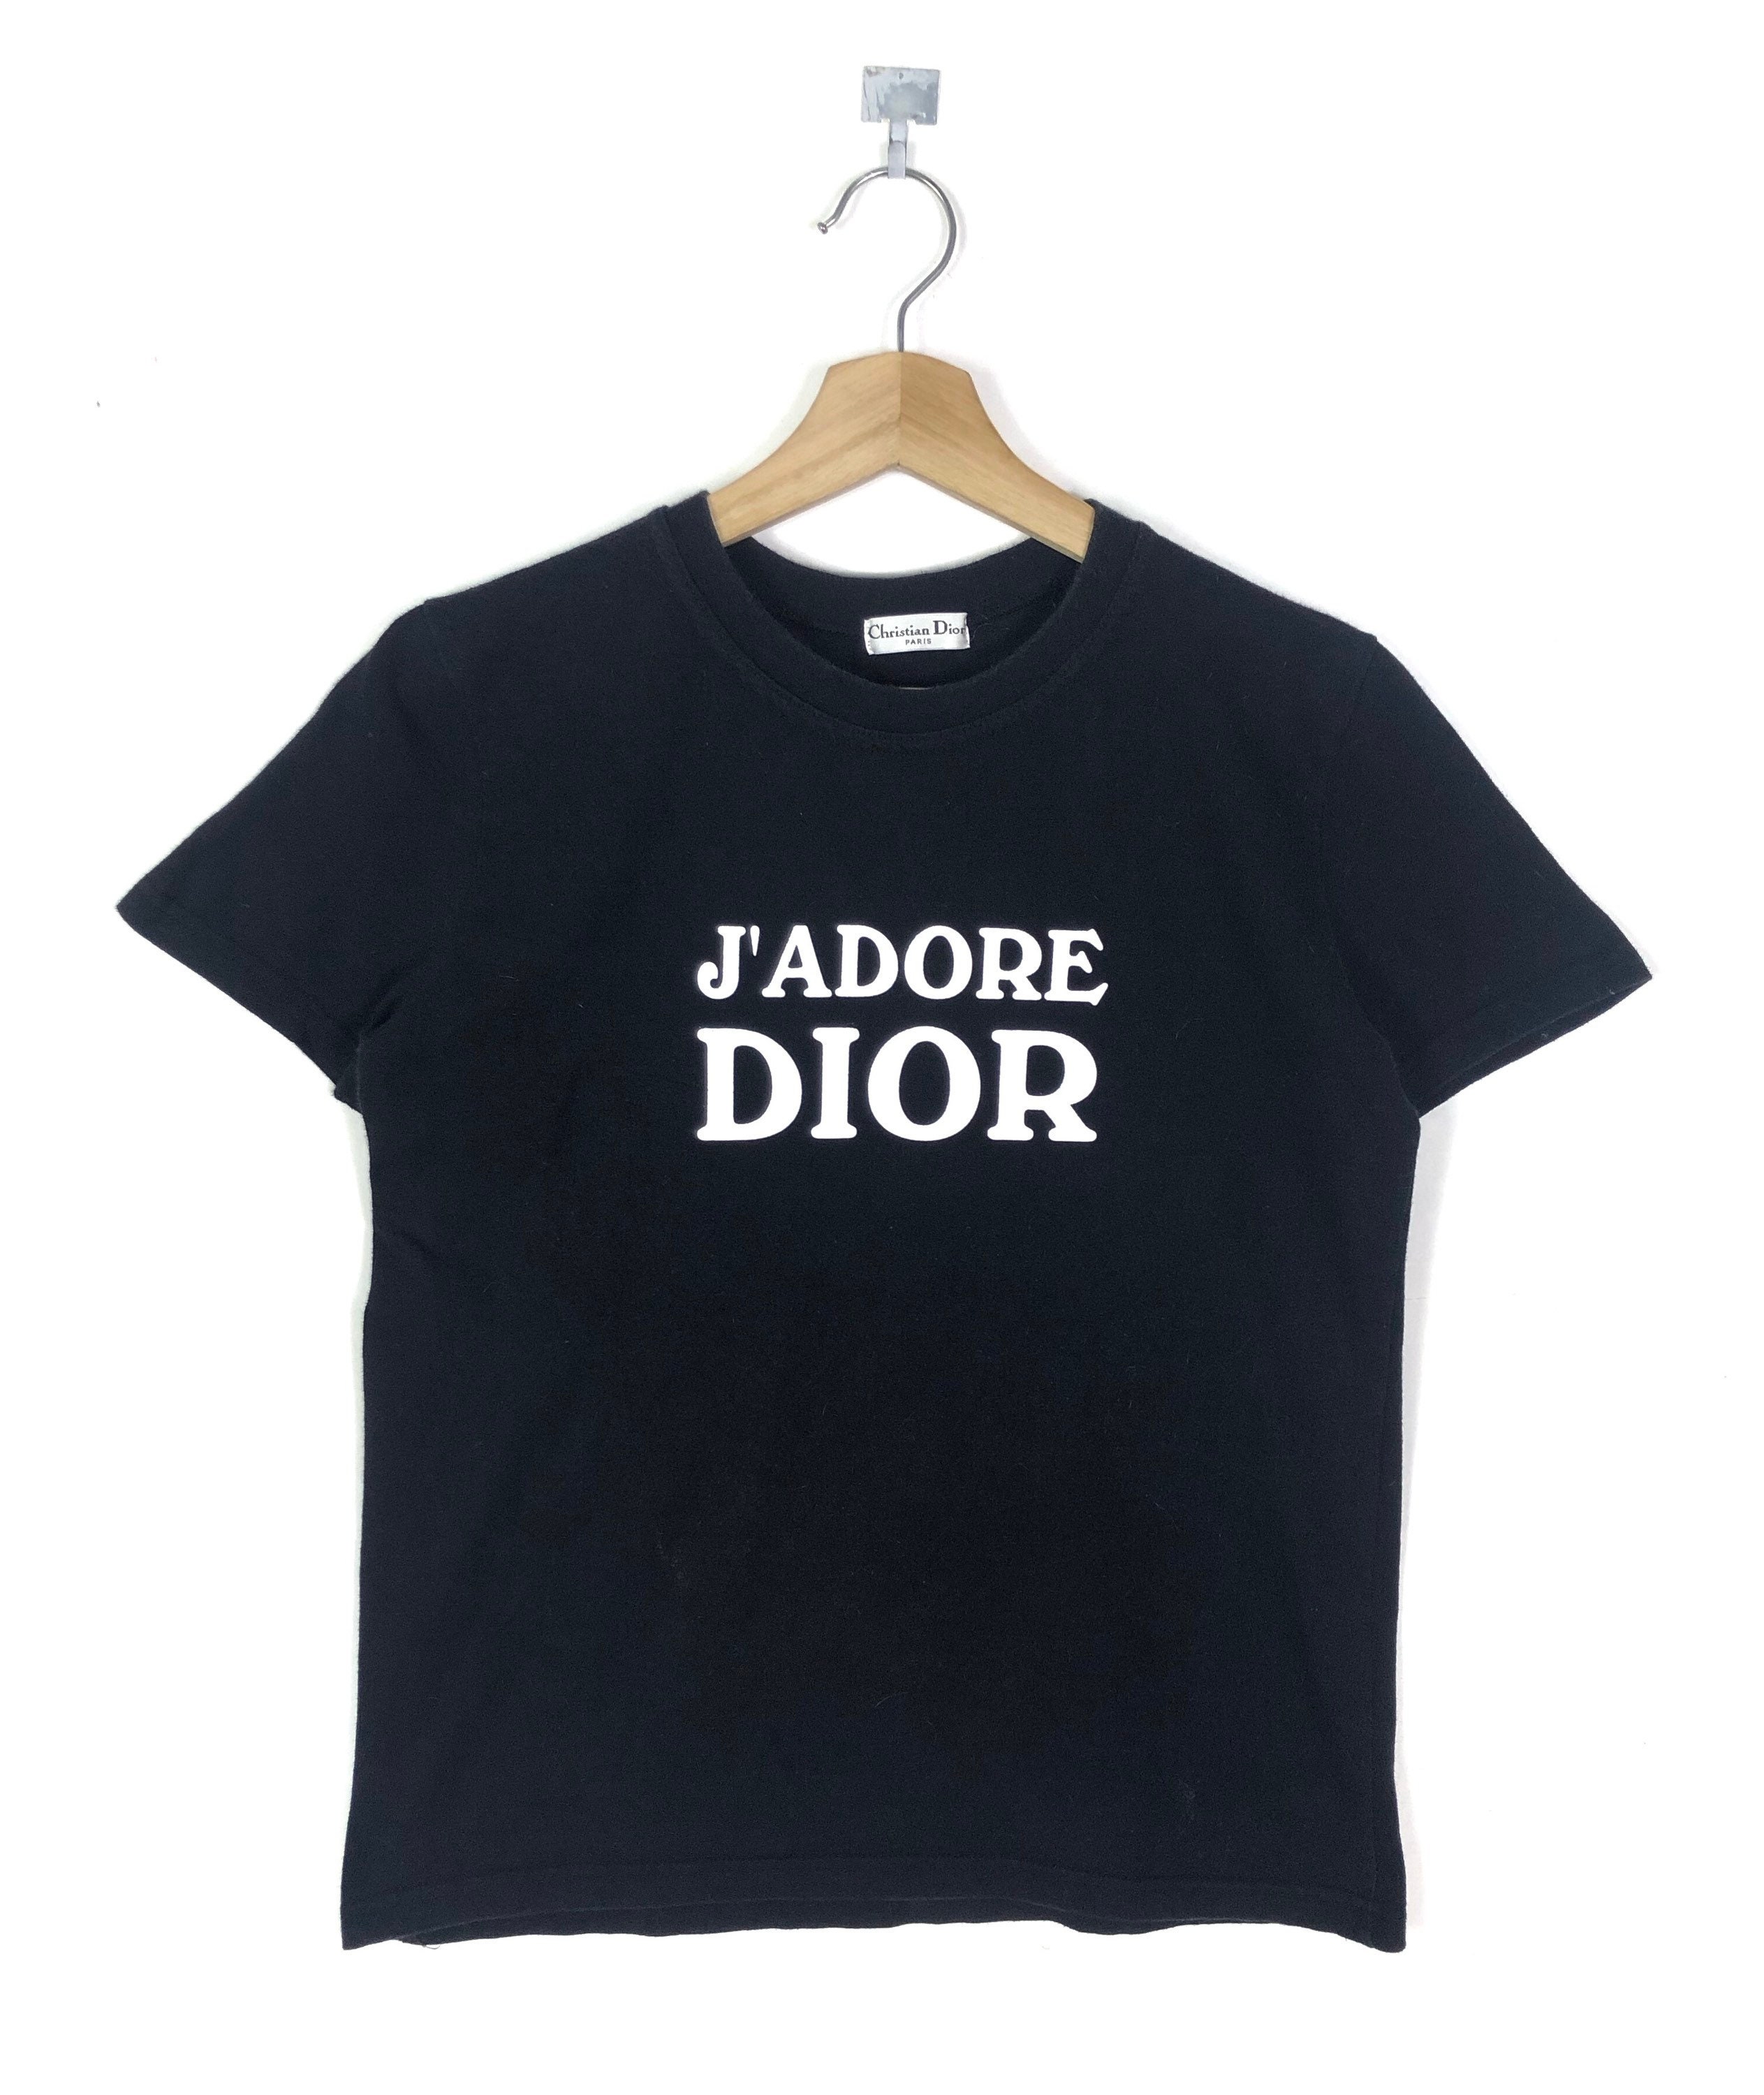 Jadore Dior Christian Dior Tops - Etsy